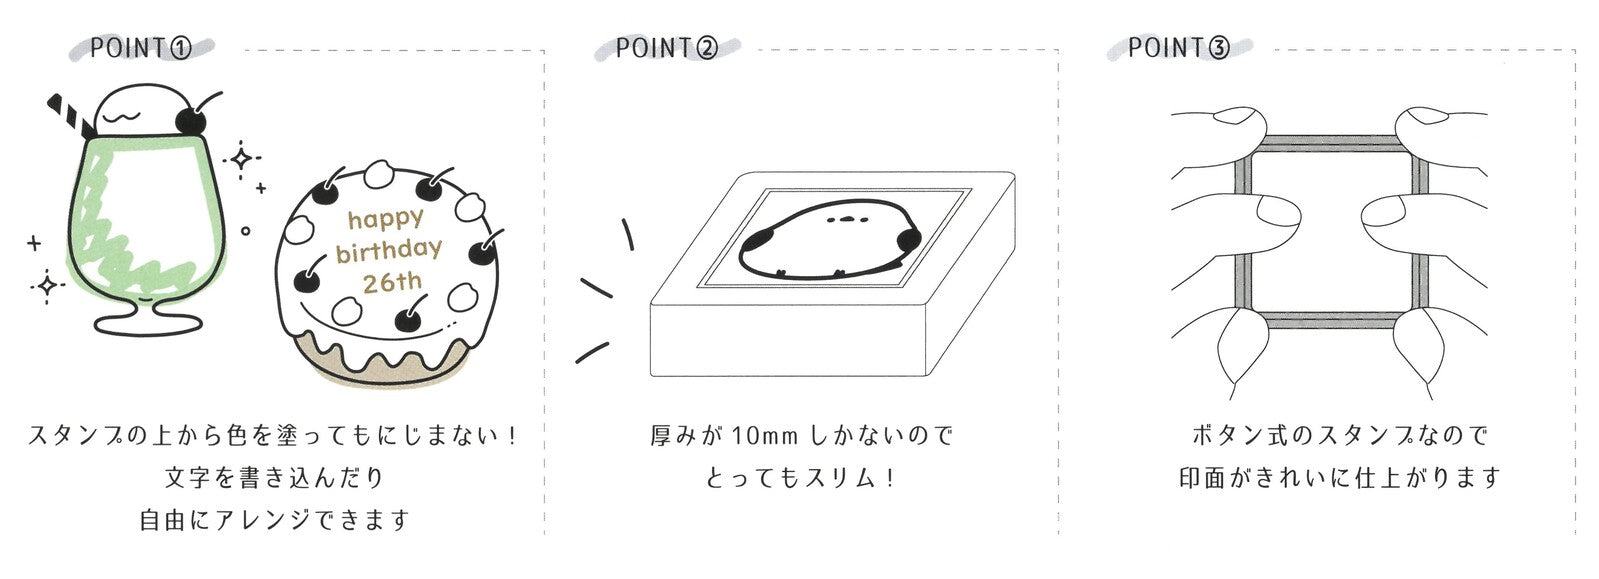 PiTAOSHI Button Type Penetrating Stamp - Long-tailed - Techo Treats